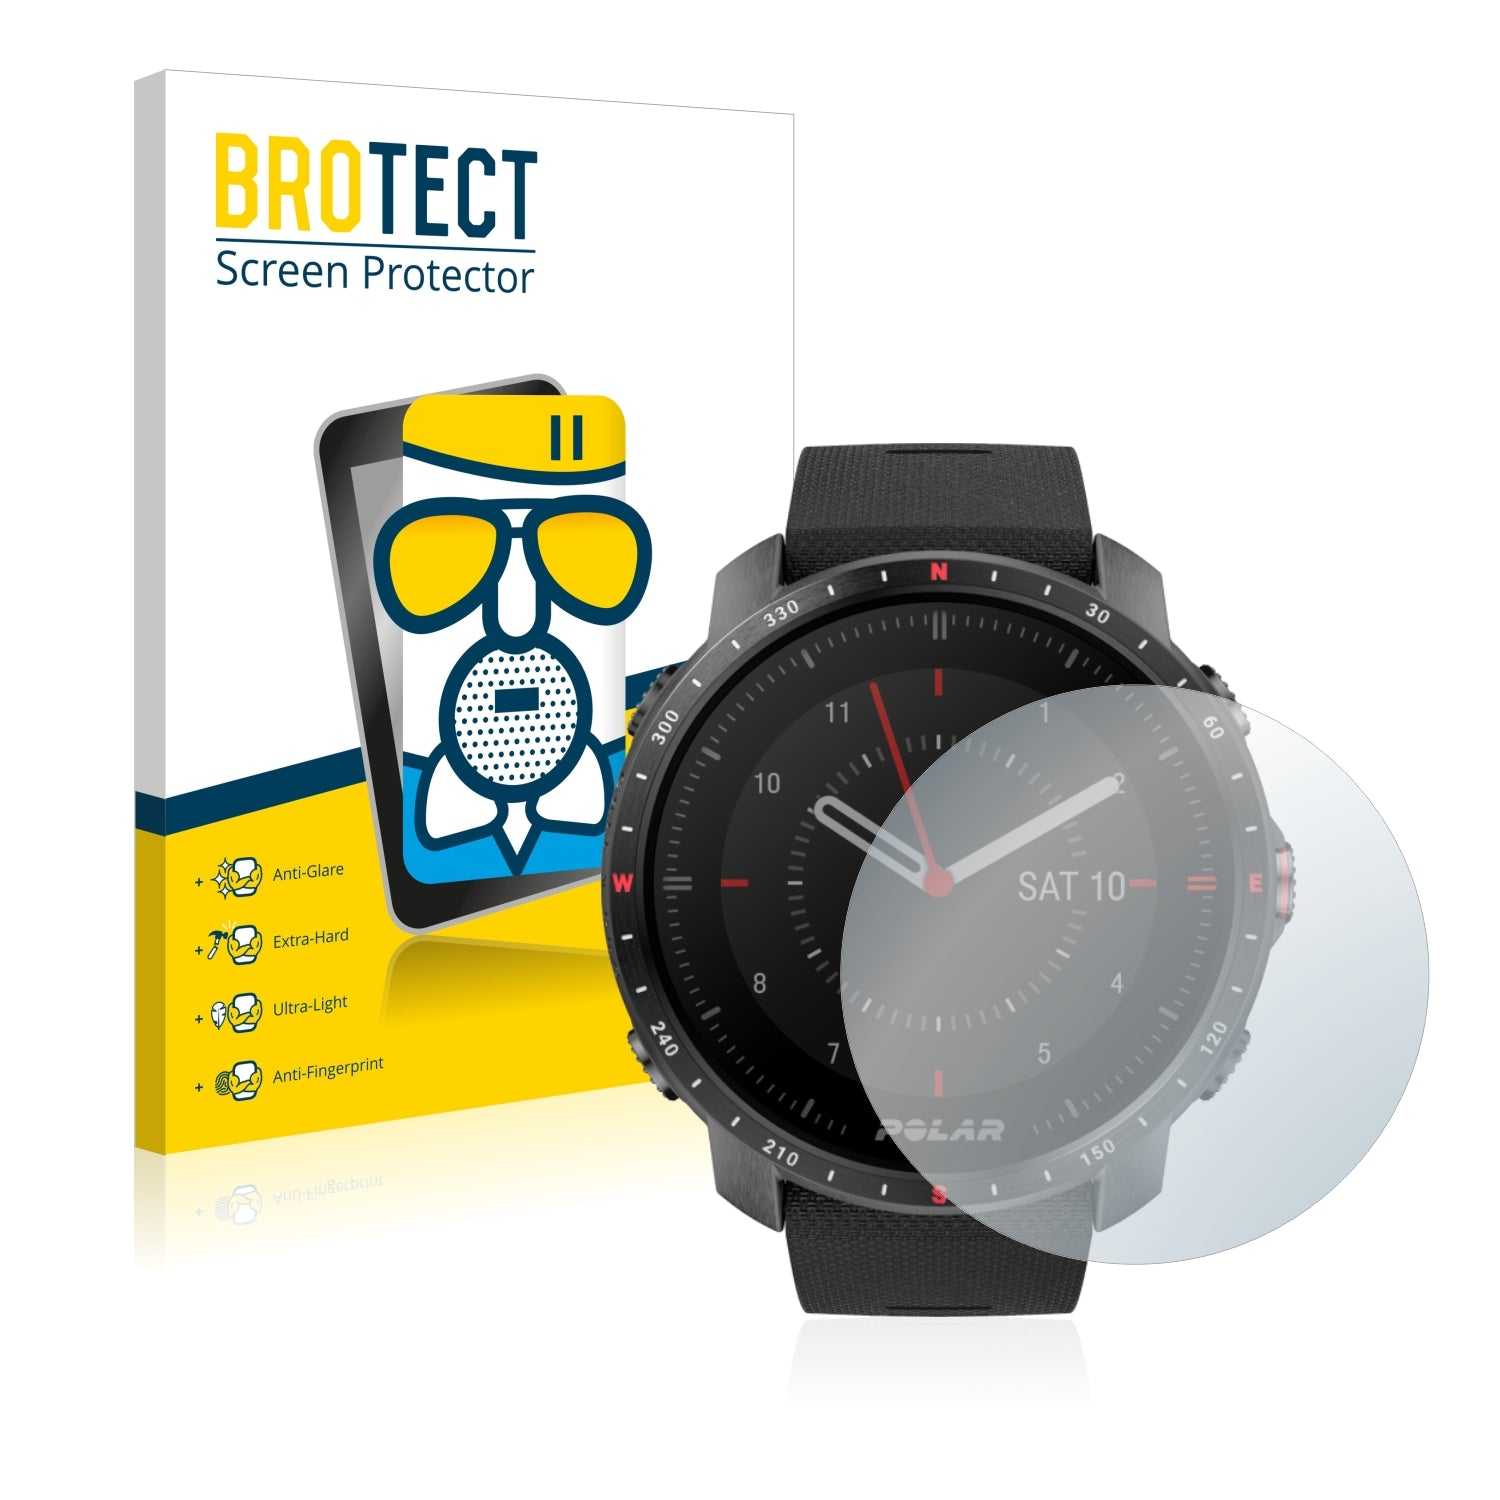 ScreenShield, Anti-Glare Screen Protector for Polar Grit X Pro